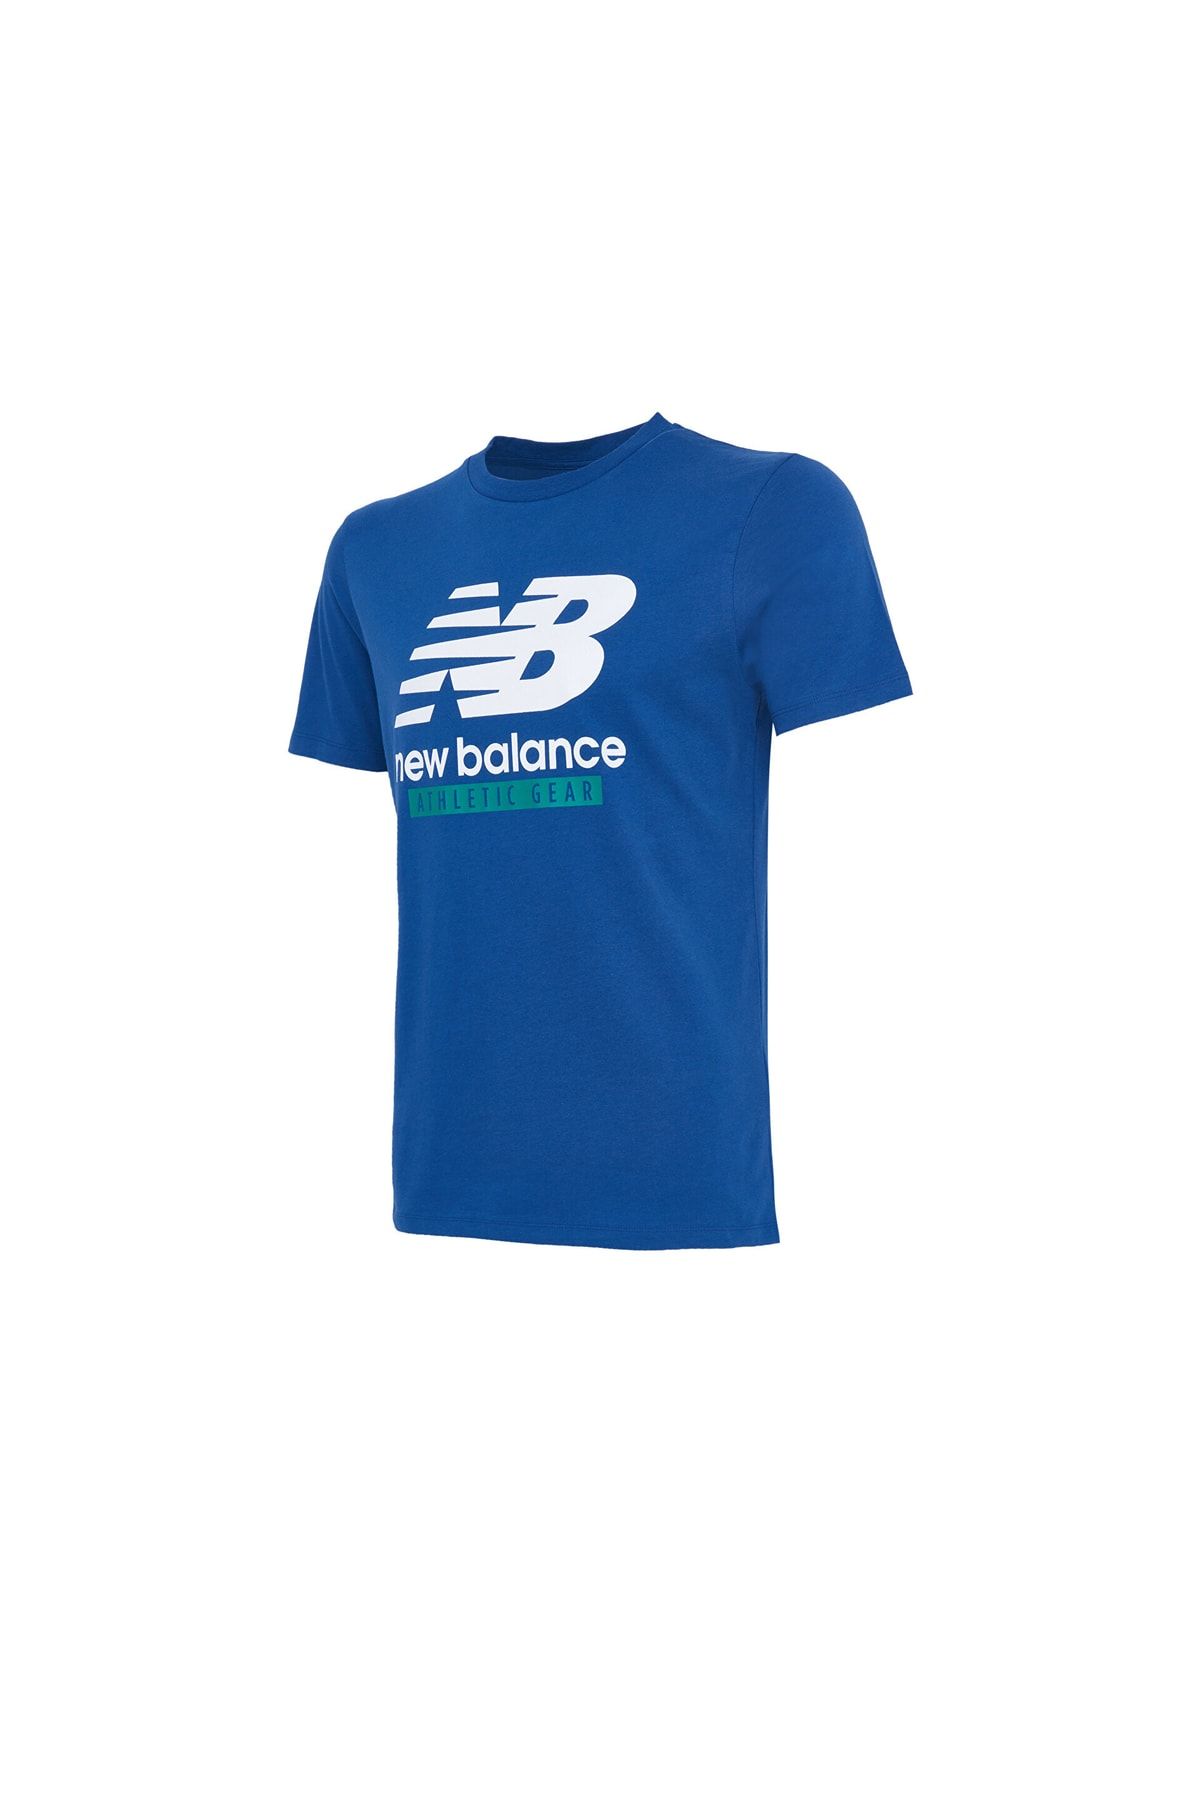 New Balance Nb Man Lifesyle T-shirt Erkek Mavi Tshirt Mnt1205-ınd